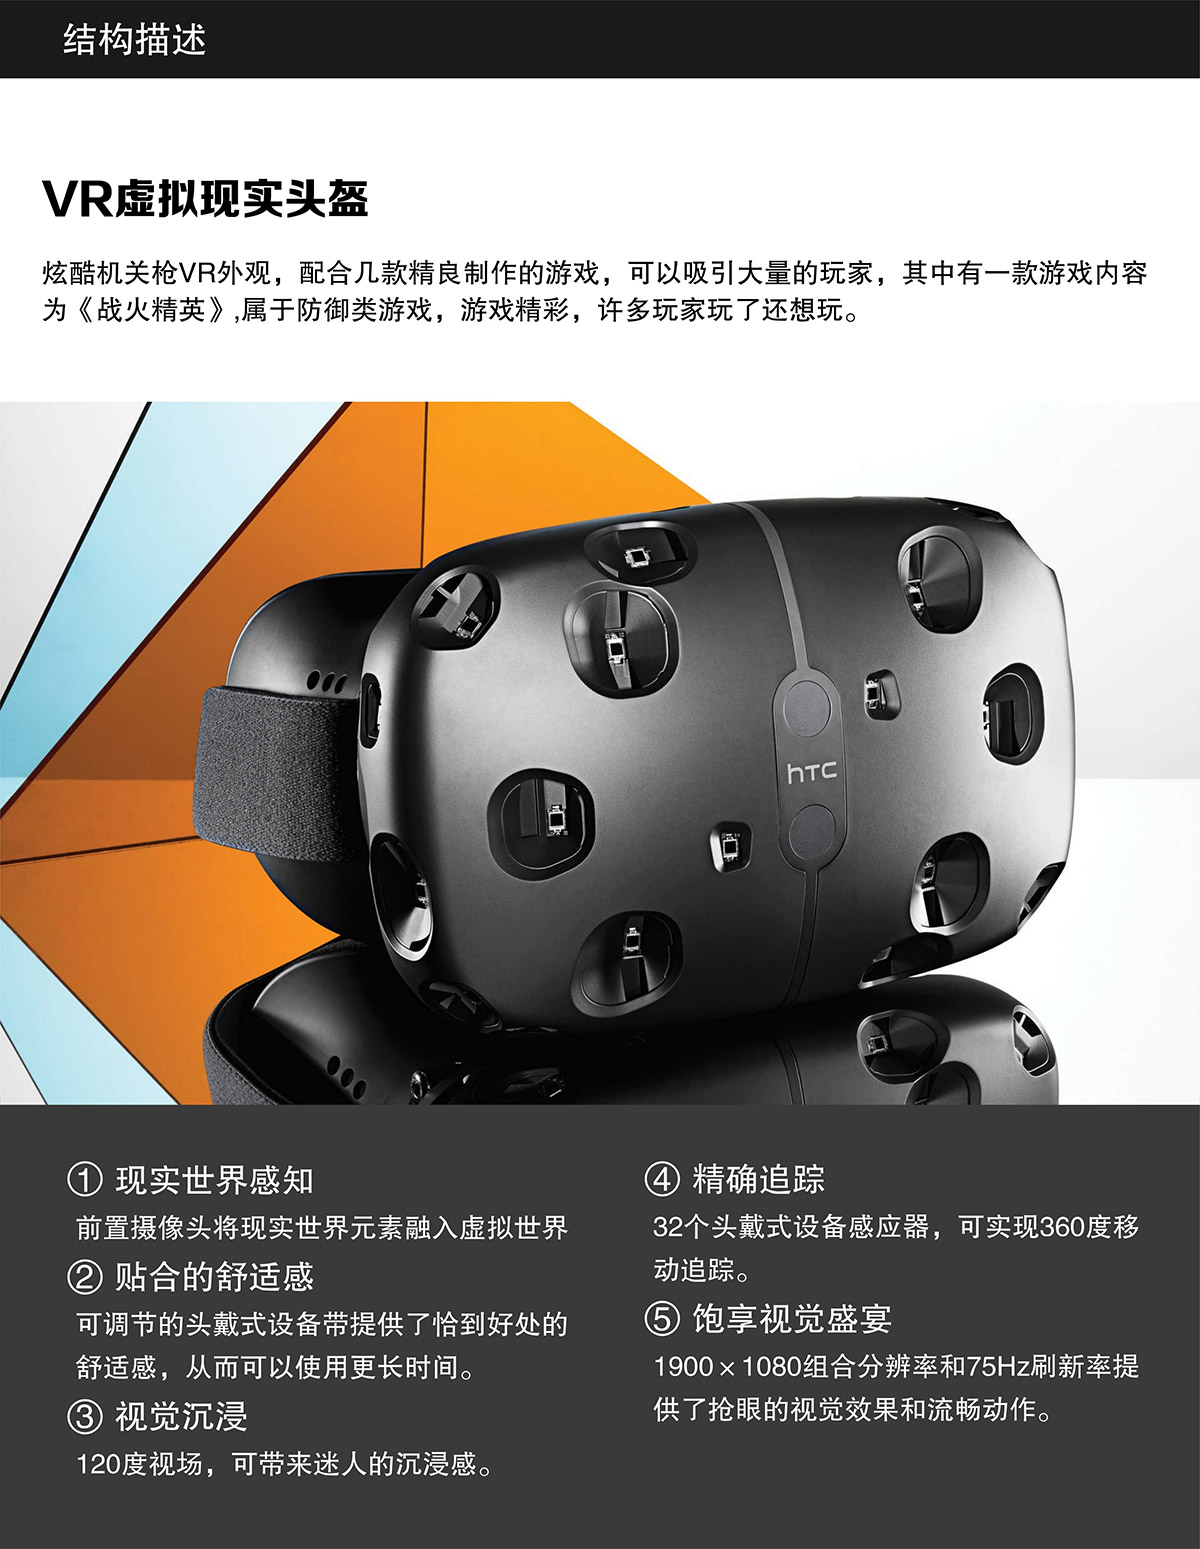 06-VR虚拟机枪结构描述.jpg